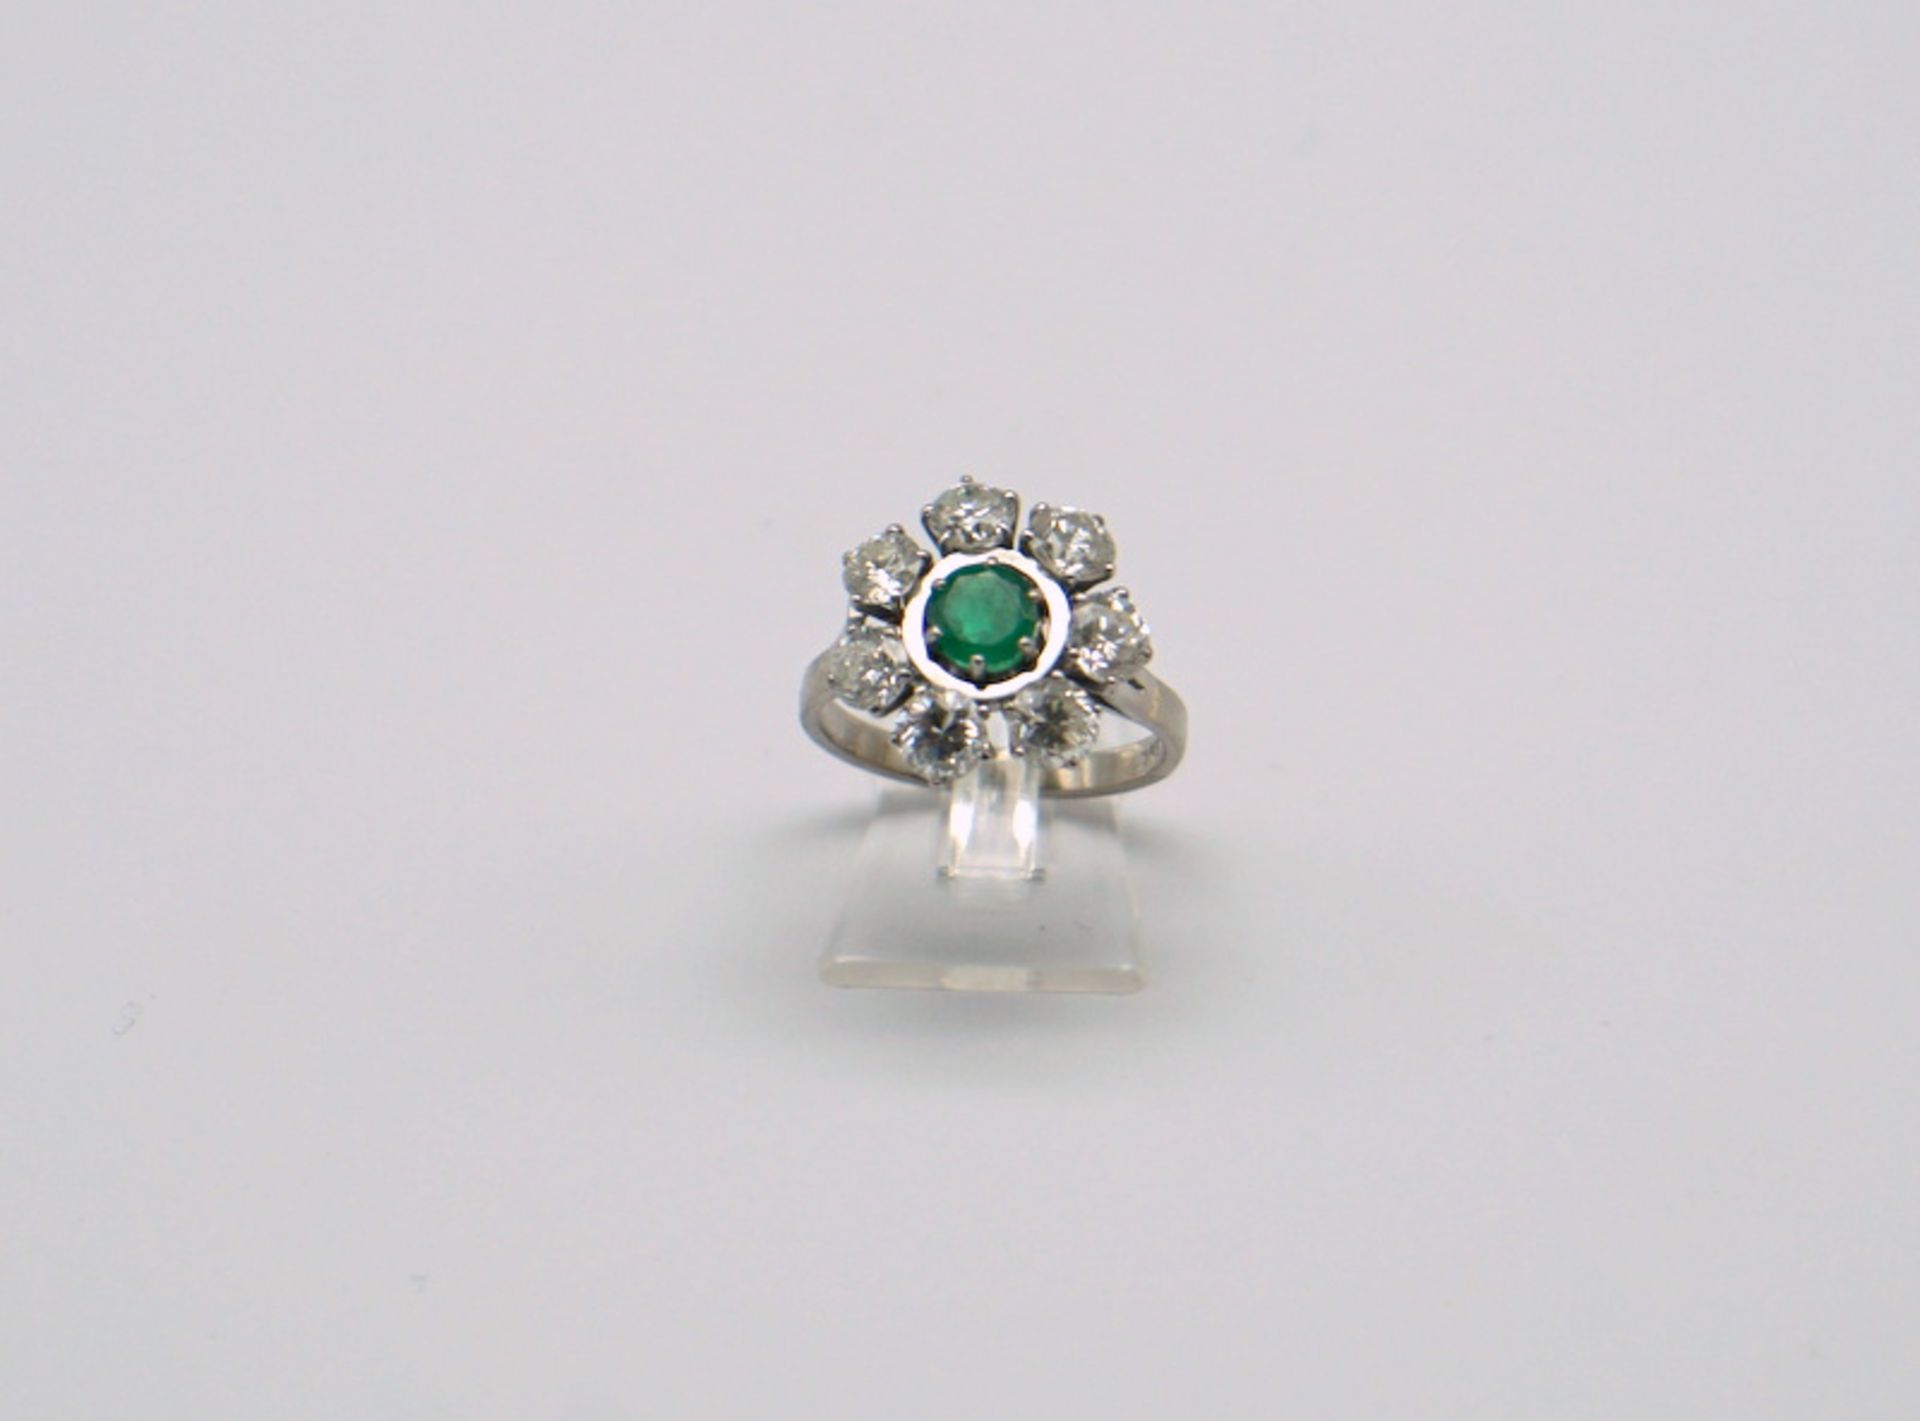 Blumenförmiger Ring mit Smaragd und Brillanten, 585 WG, 2ct Brillanten - Image 4 of 7